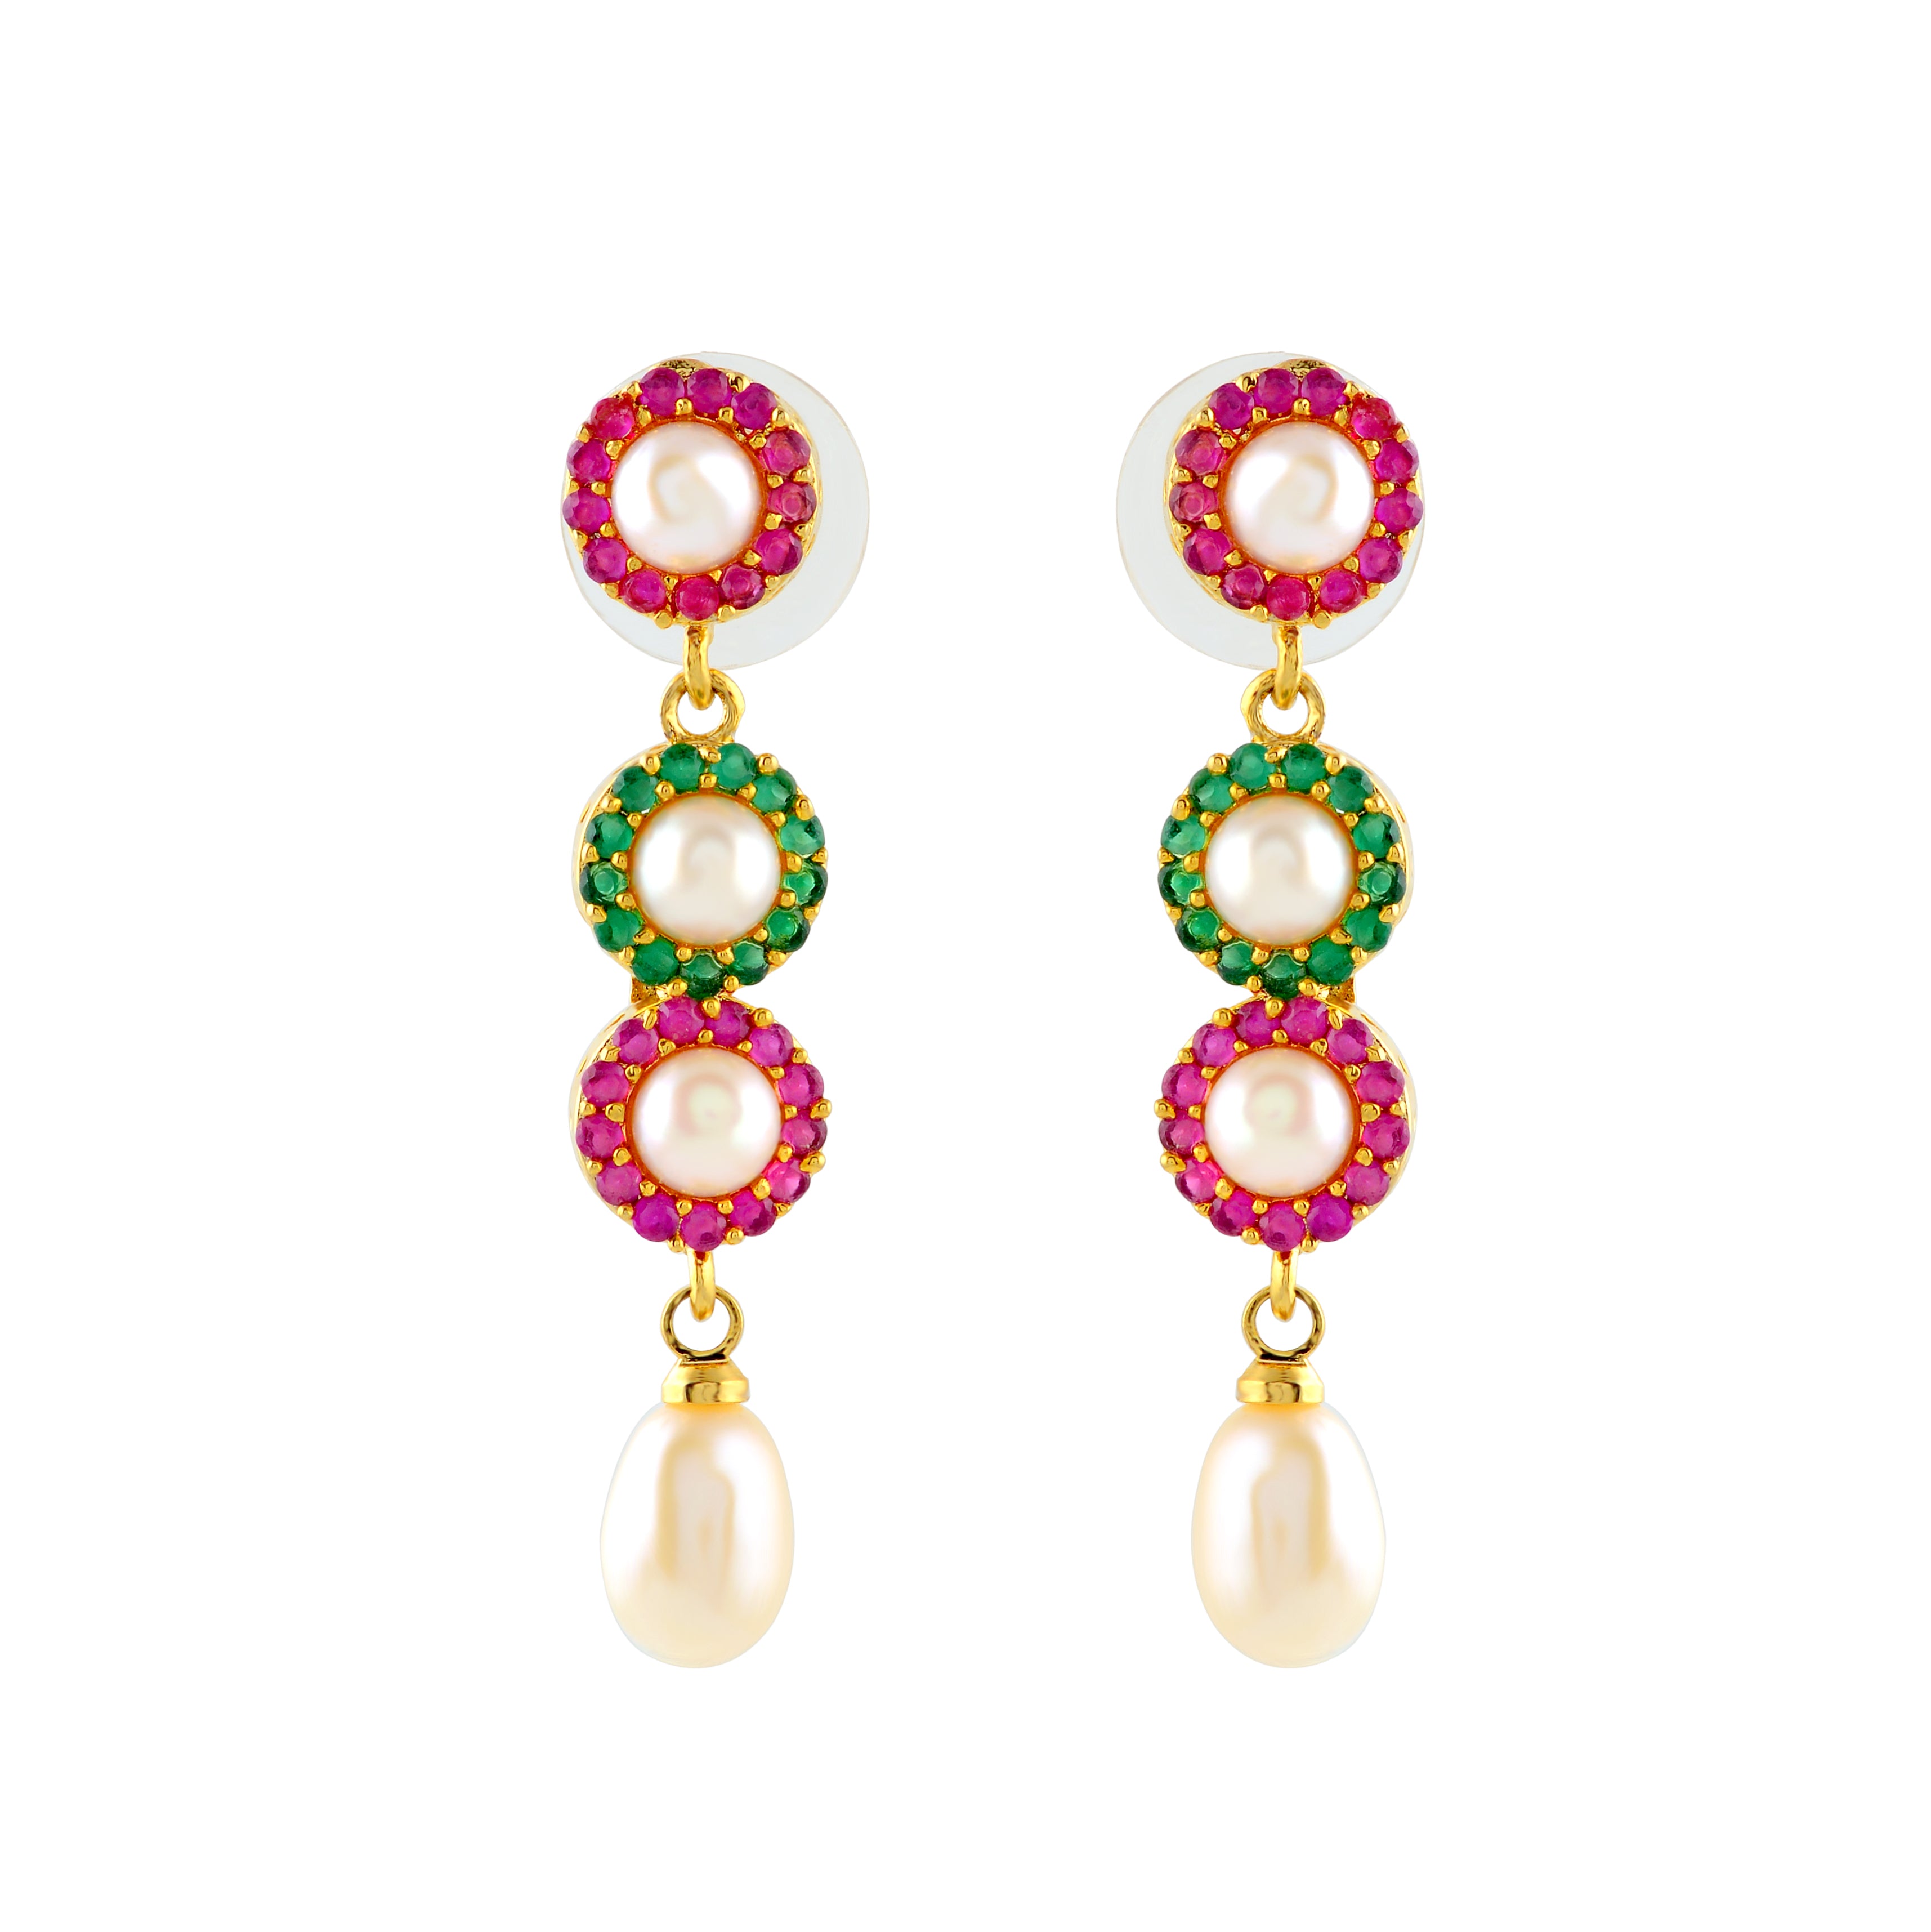 Vibrant Hanging Pearl earrings